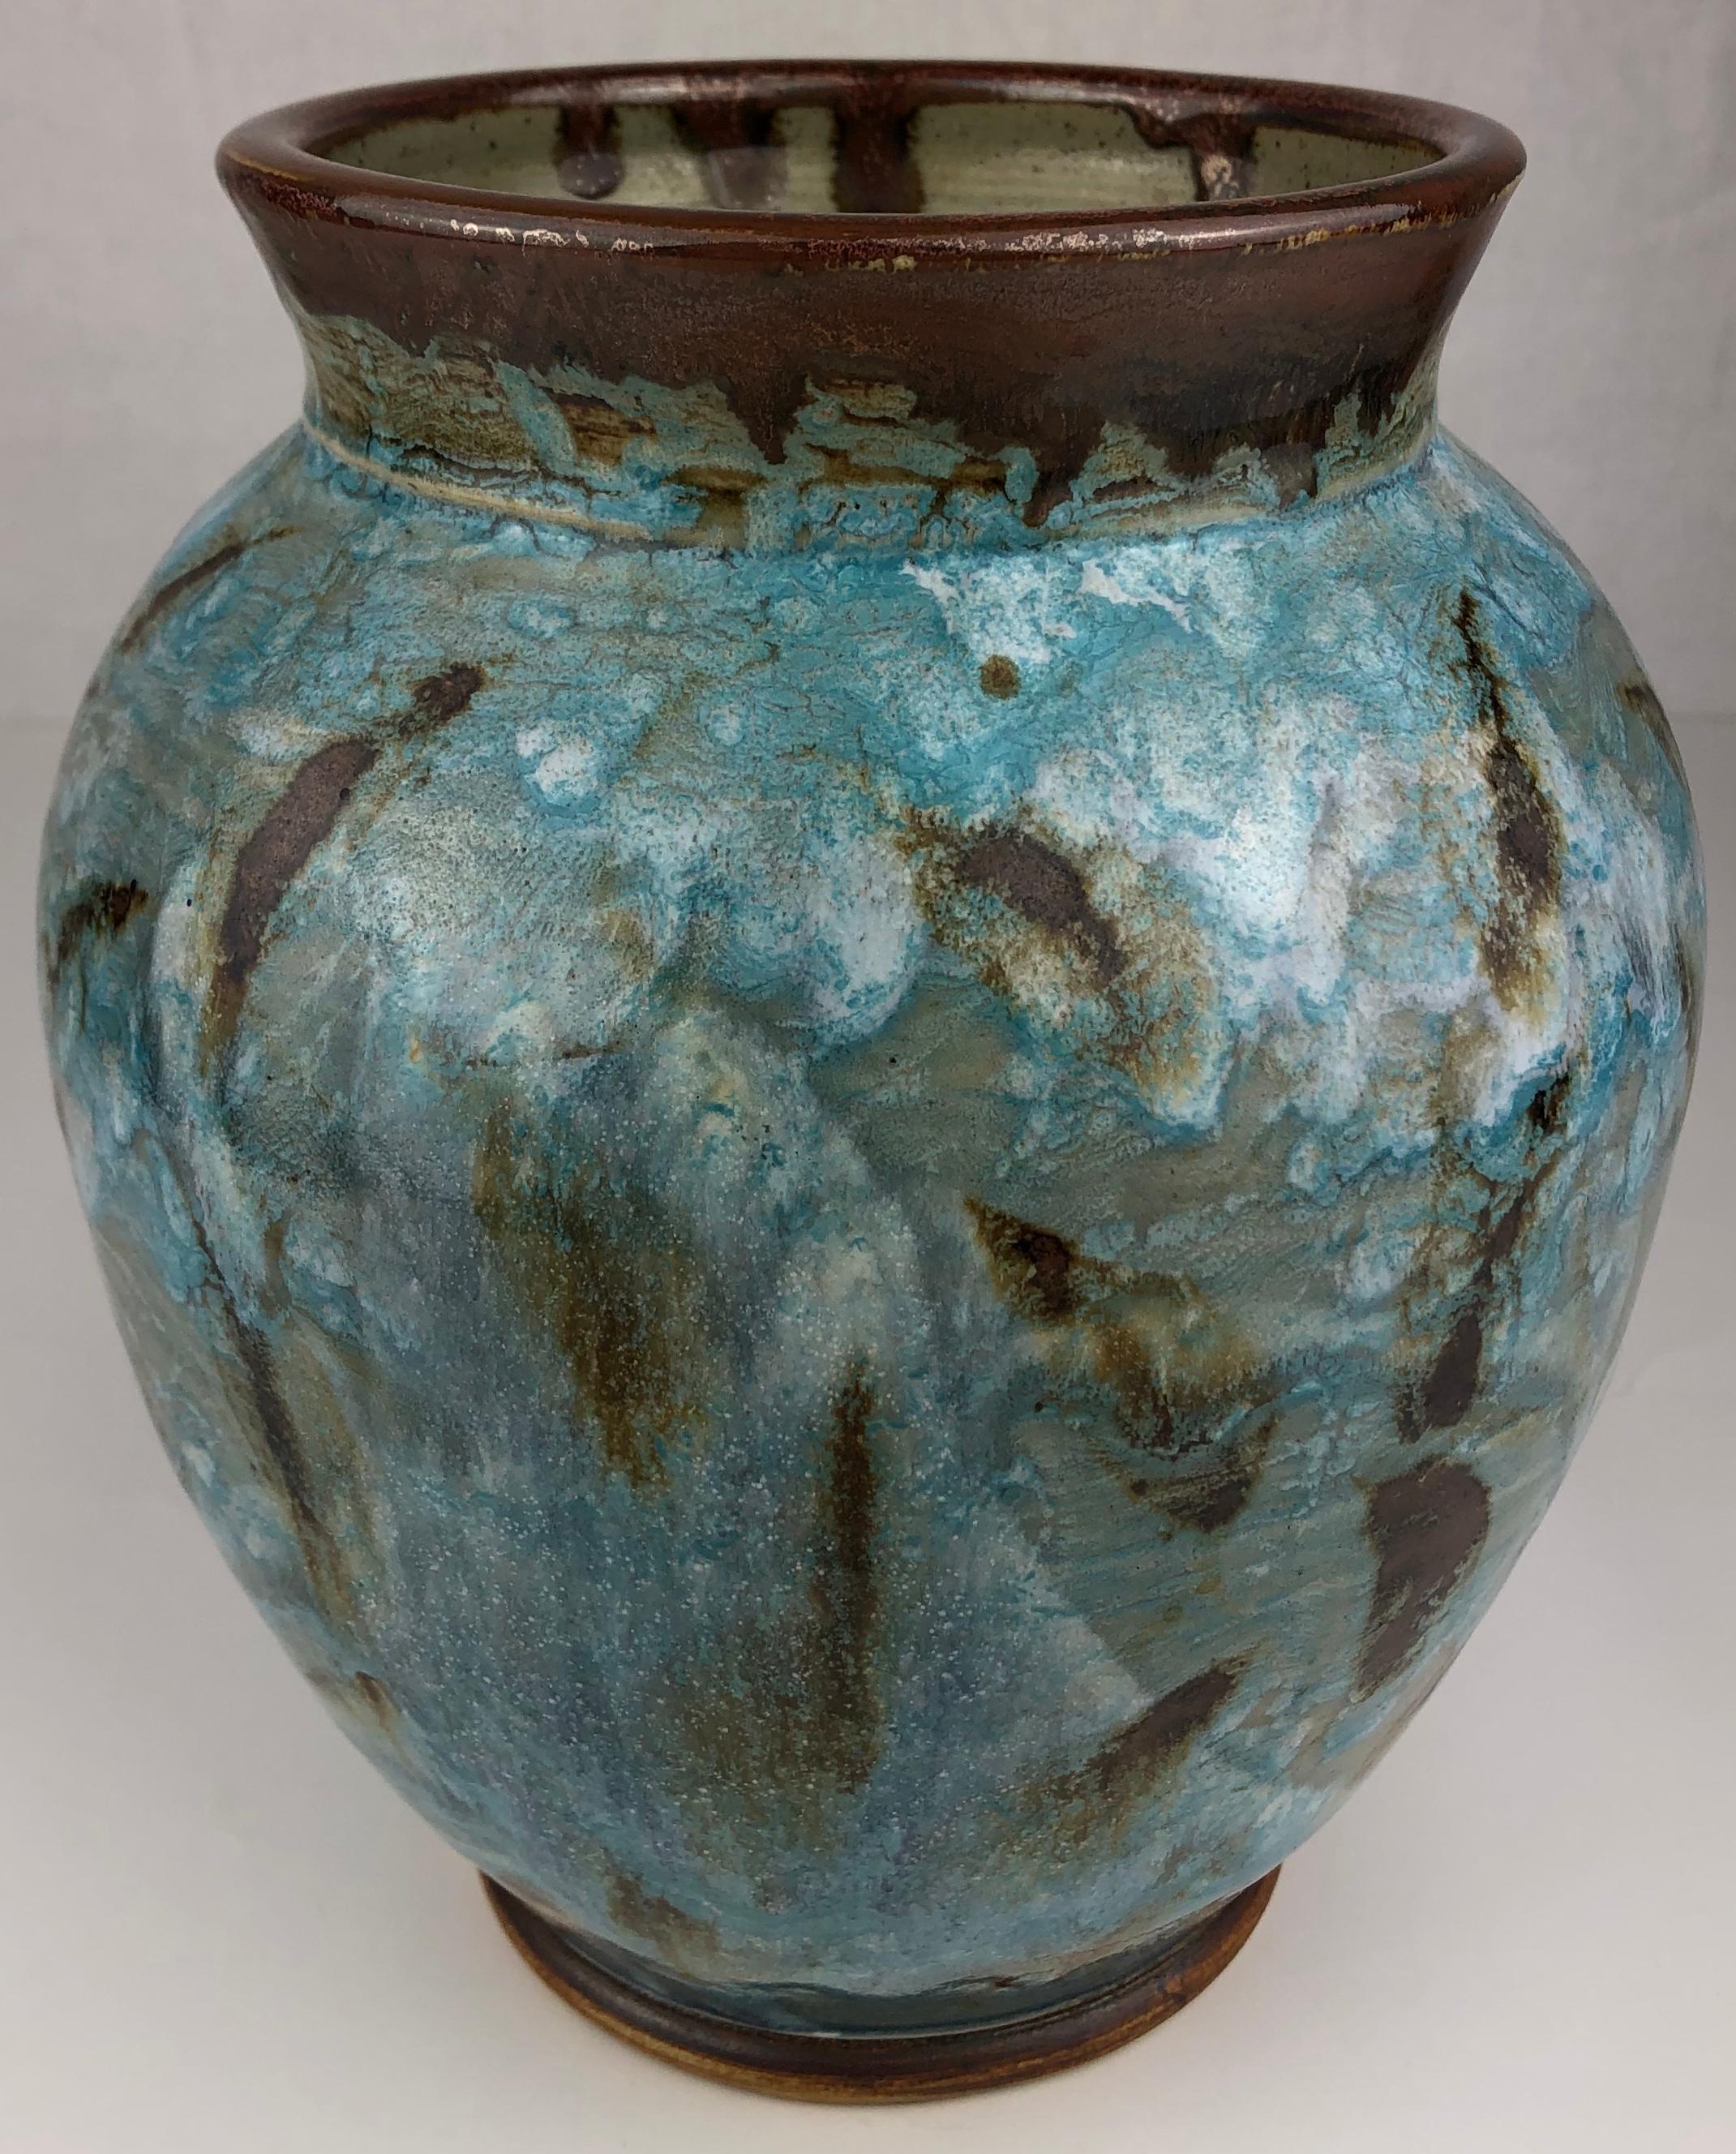 aquatic plant vase